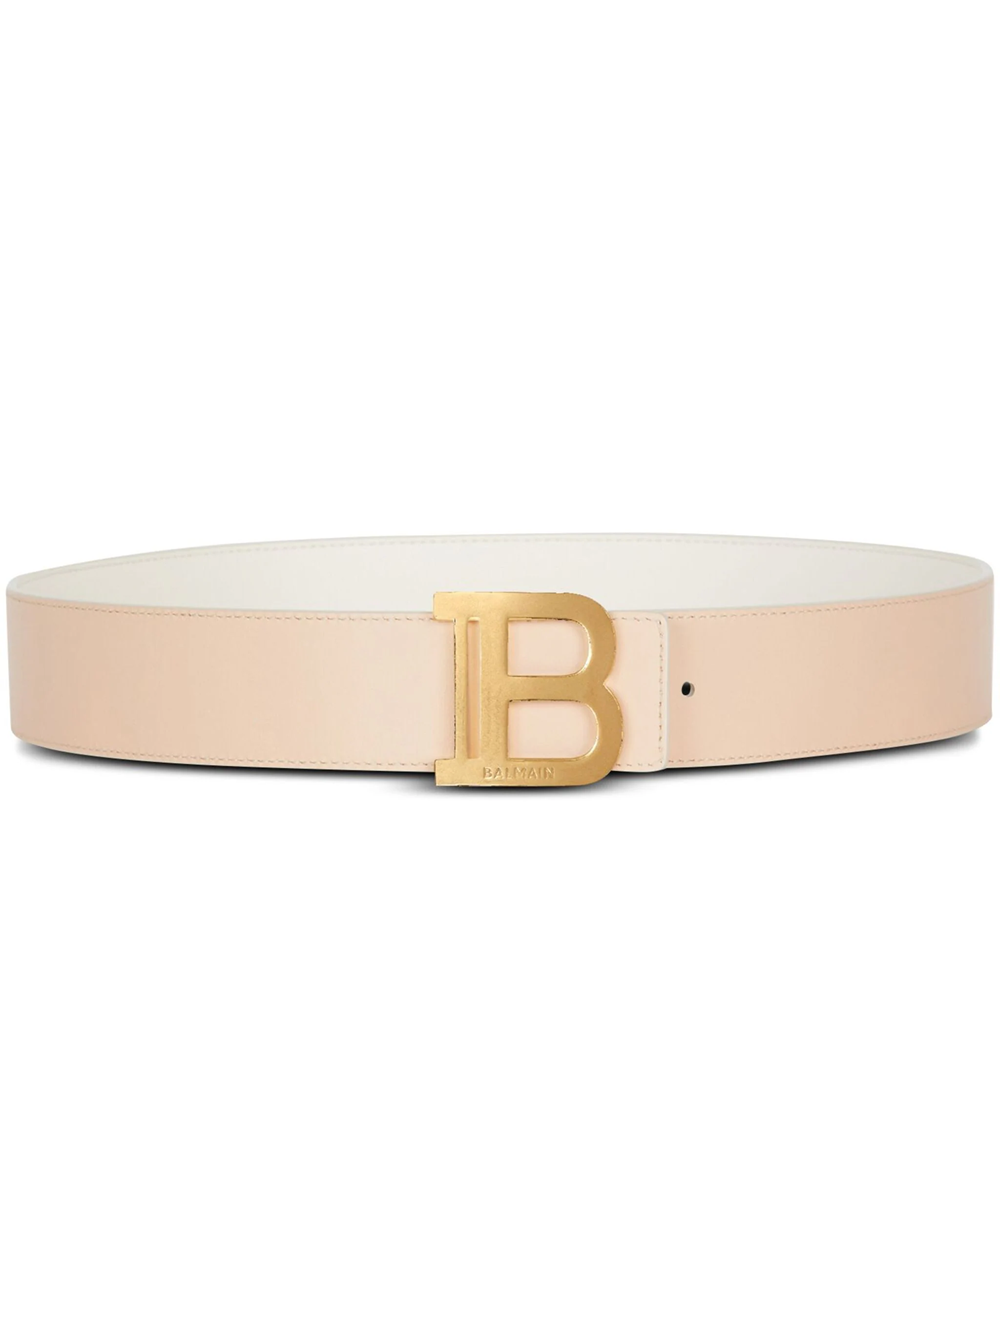 Balmain Reversible Leather Belt In Nude & Neutrals